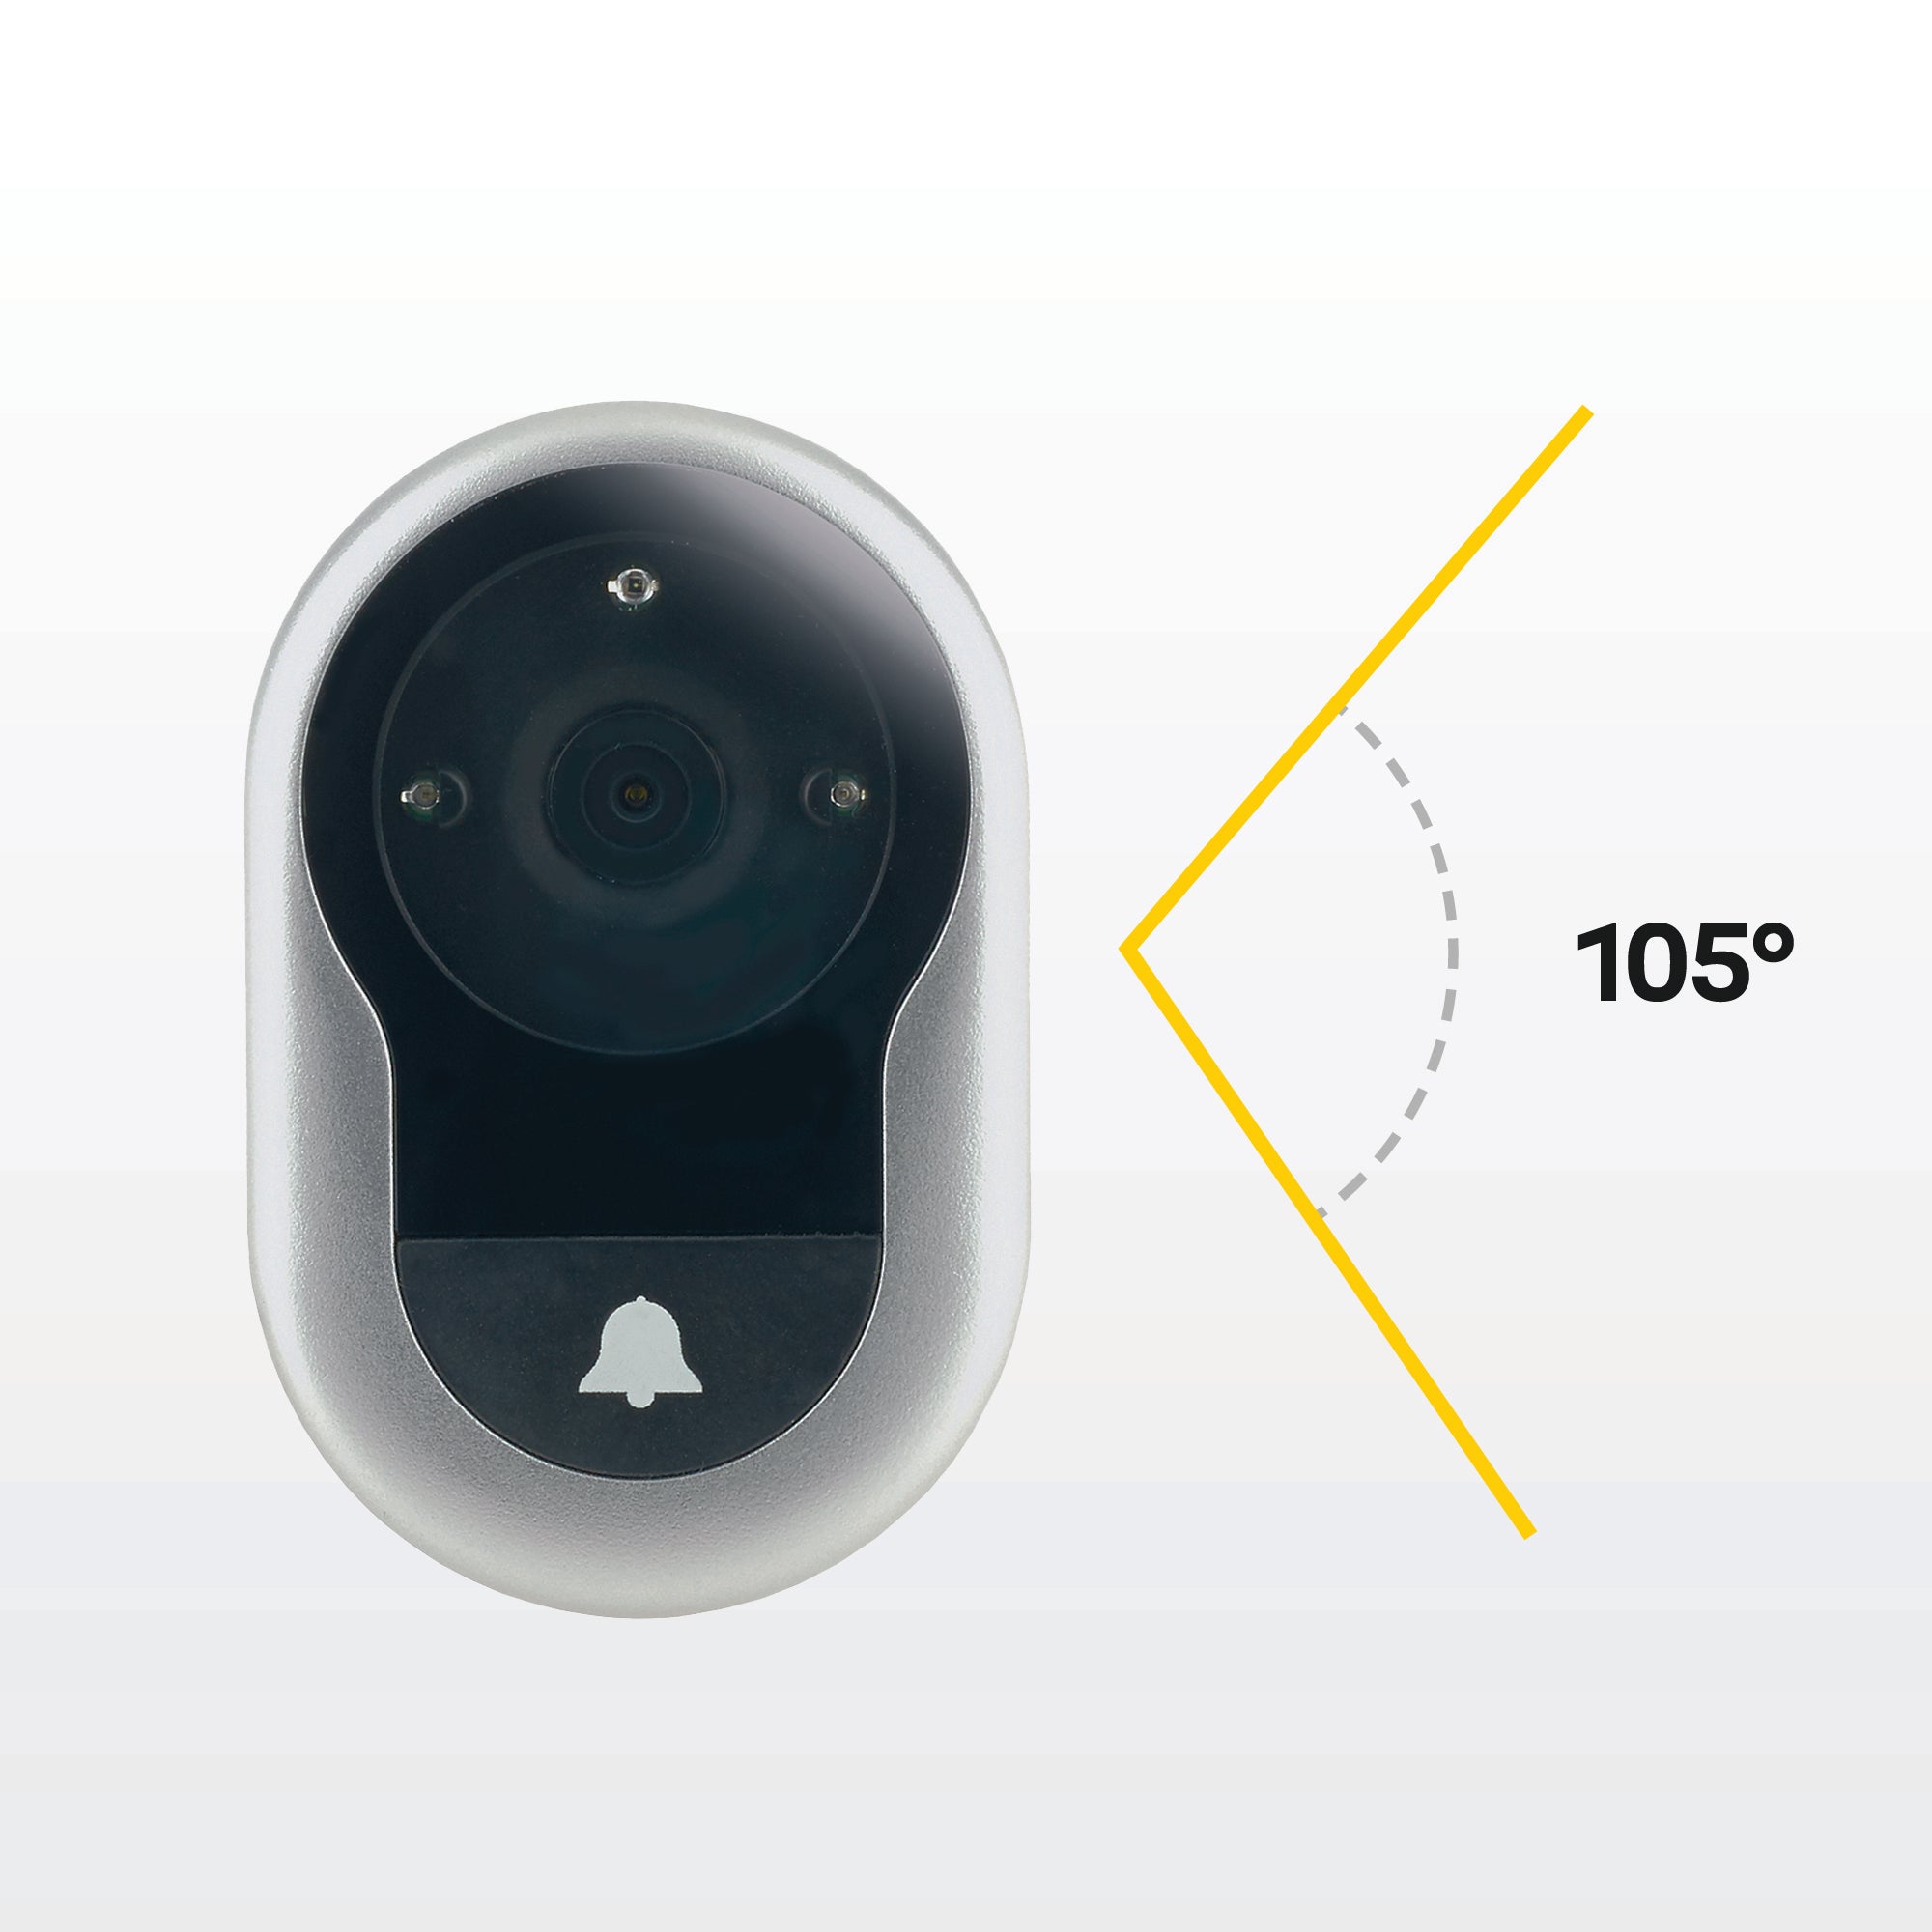 Yale Digital Door Spy DDV 4500, 4" Display, Silver, With Doorbell & Night Vision